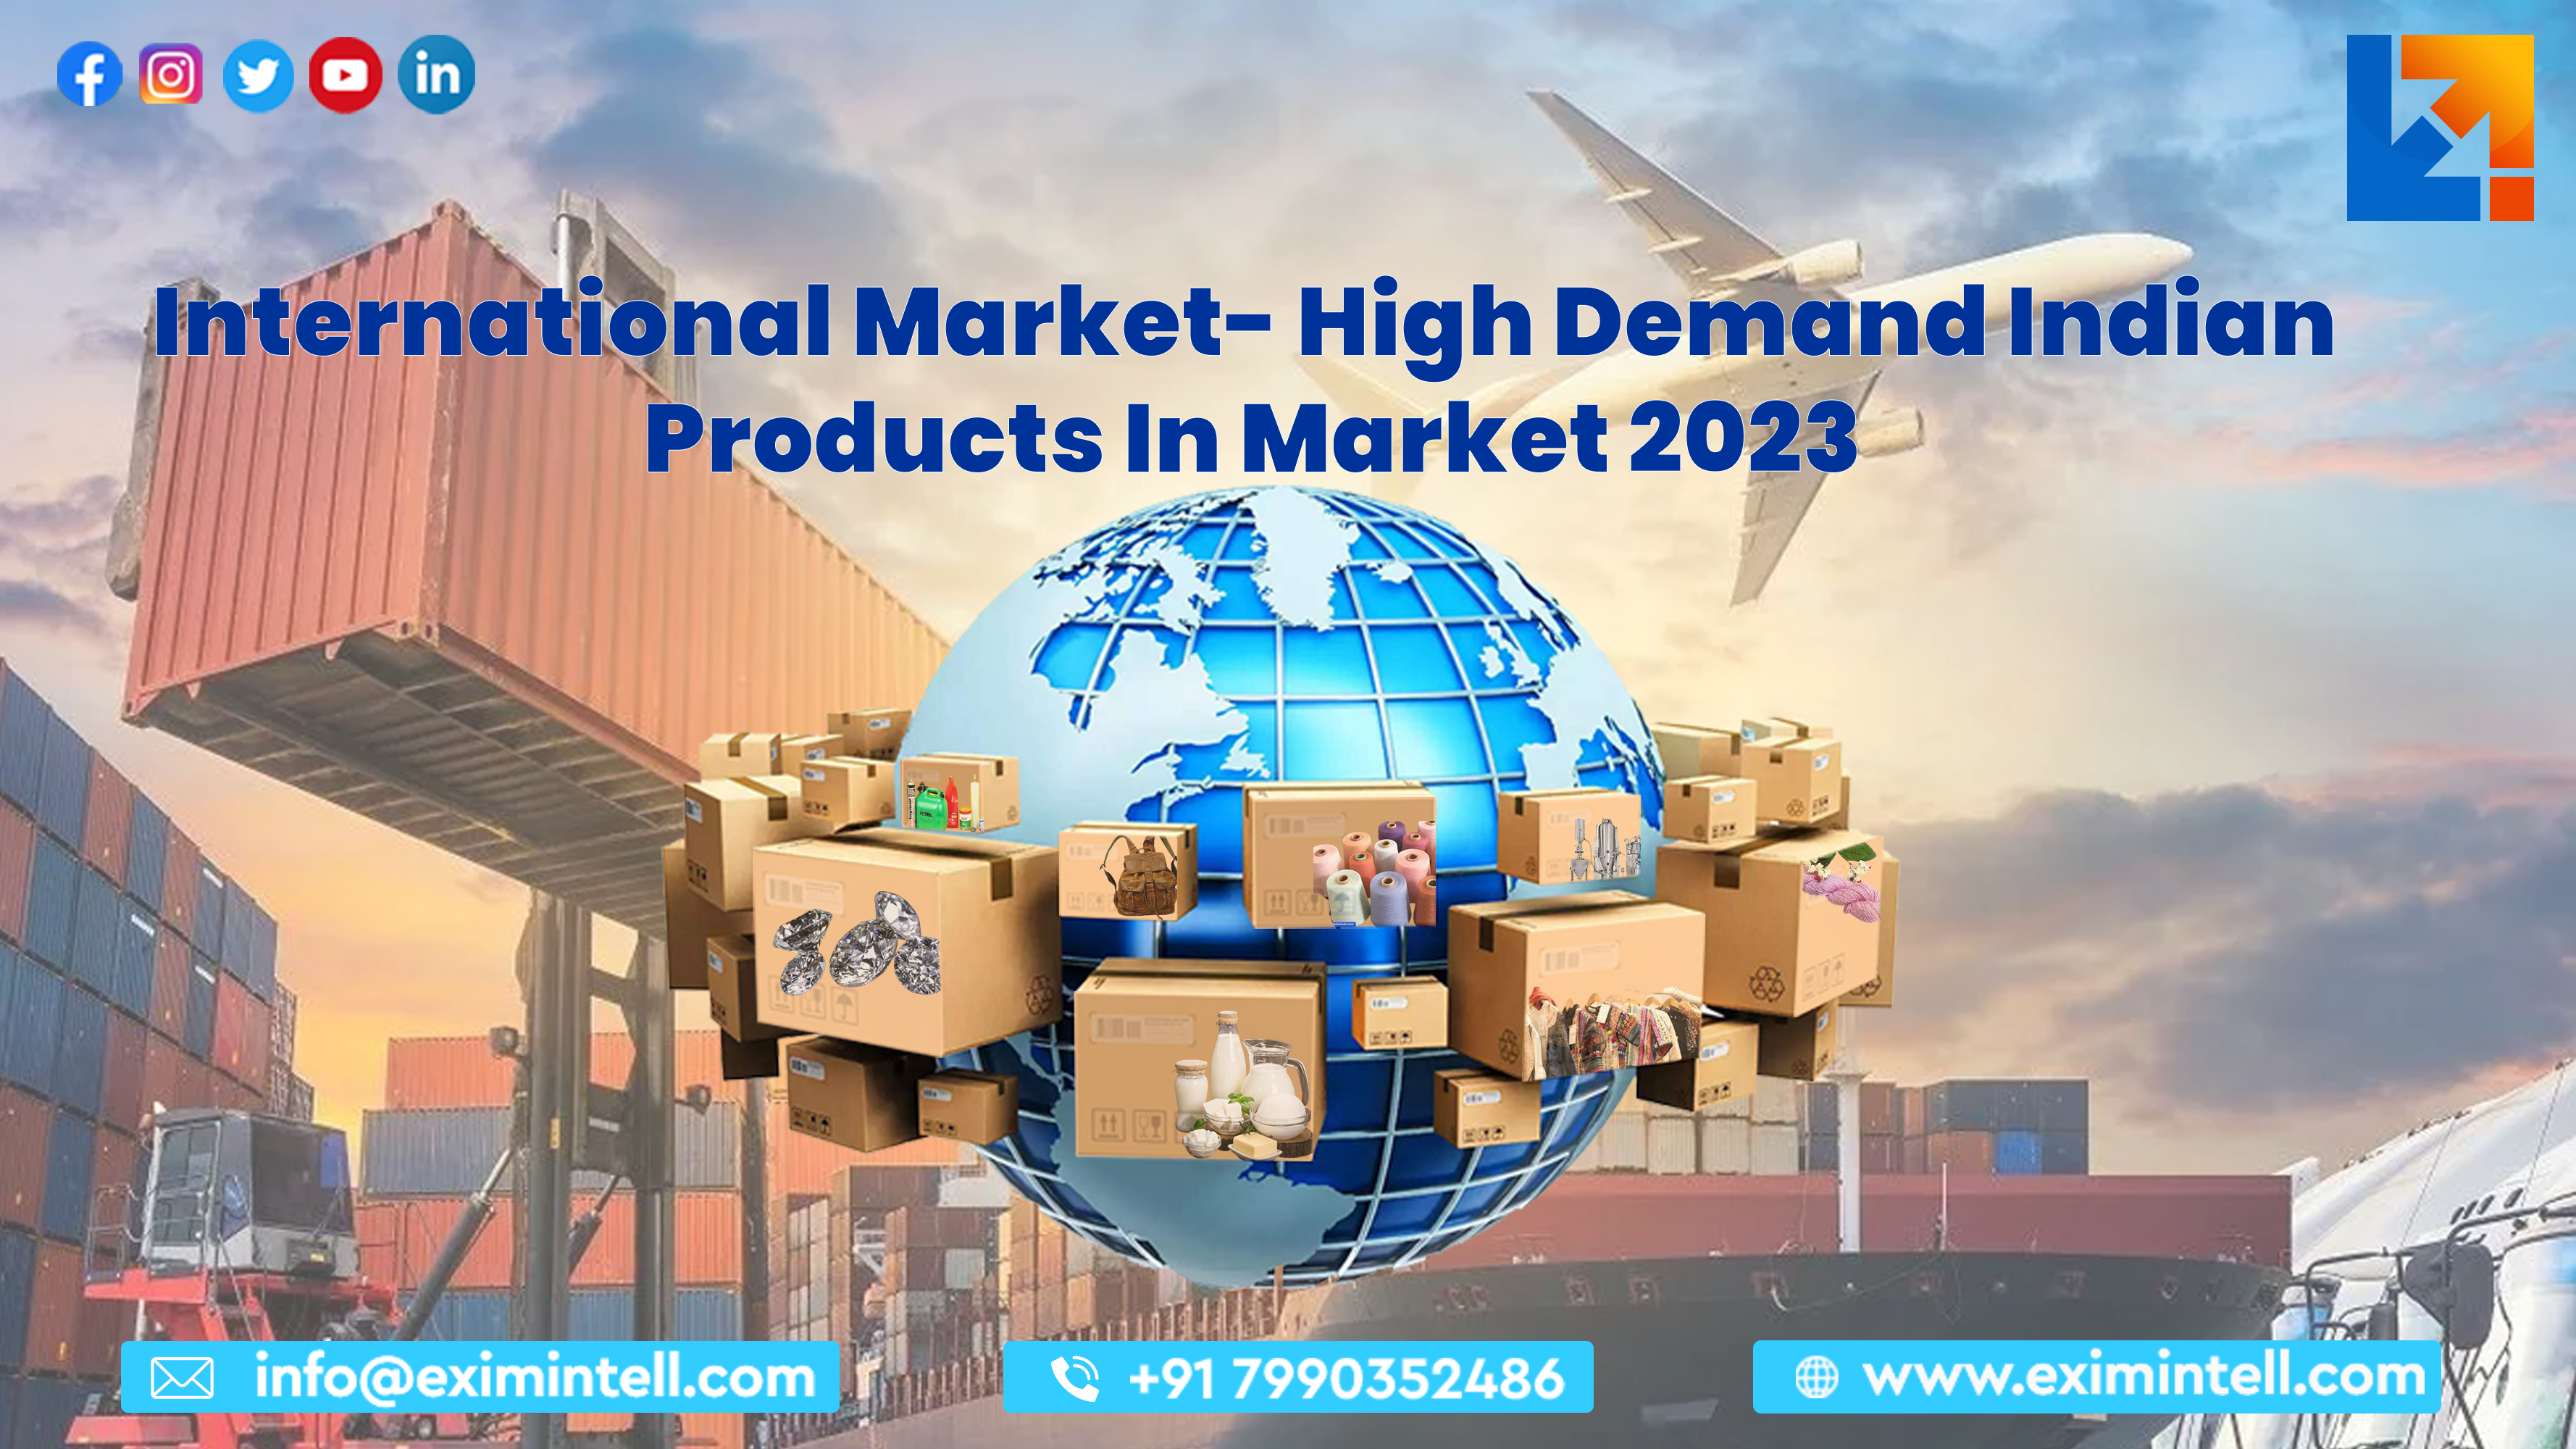 International Market- High Demand Indian Products In Market 2023